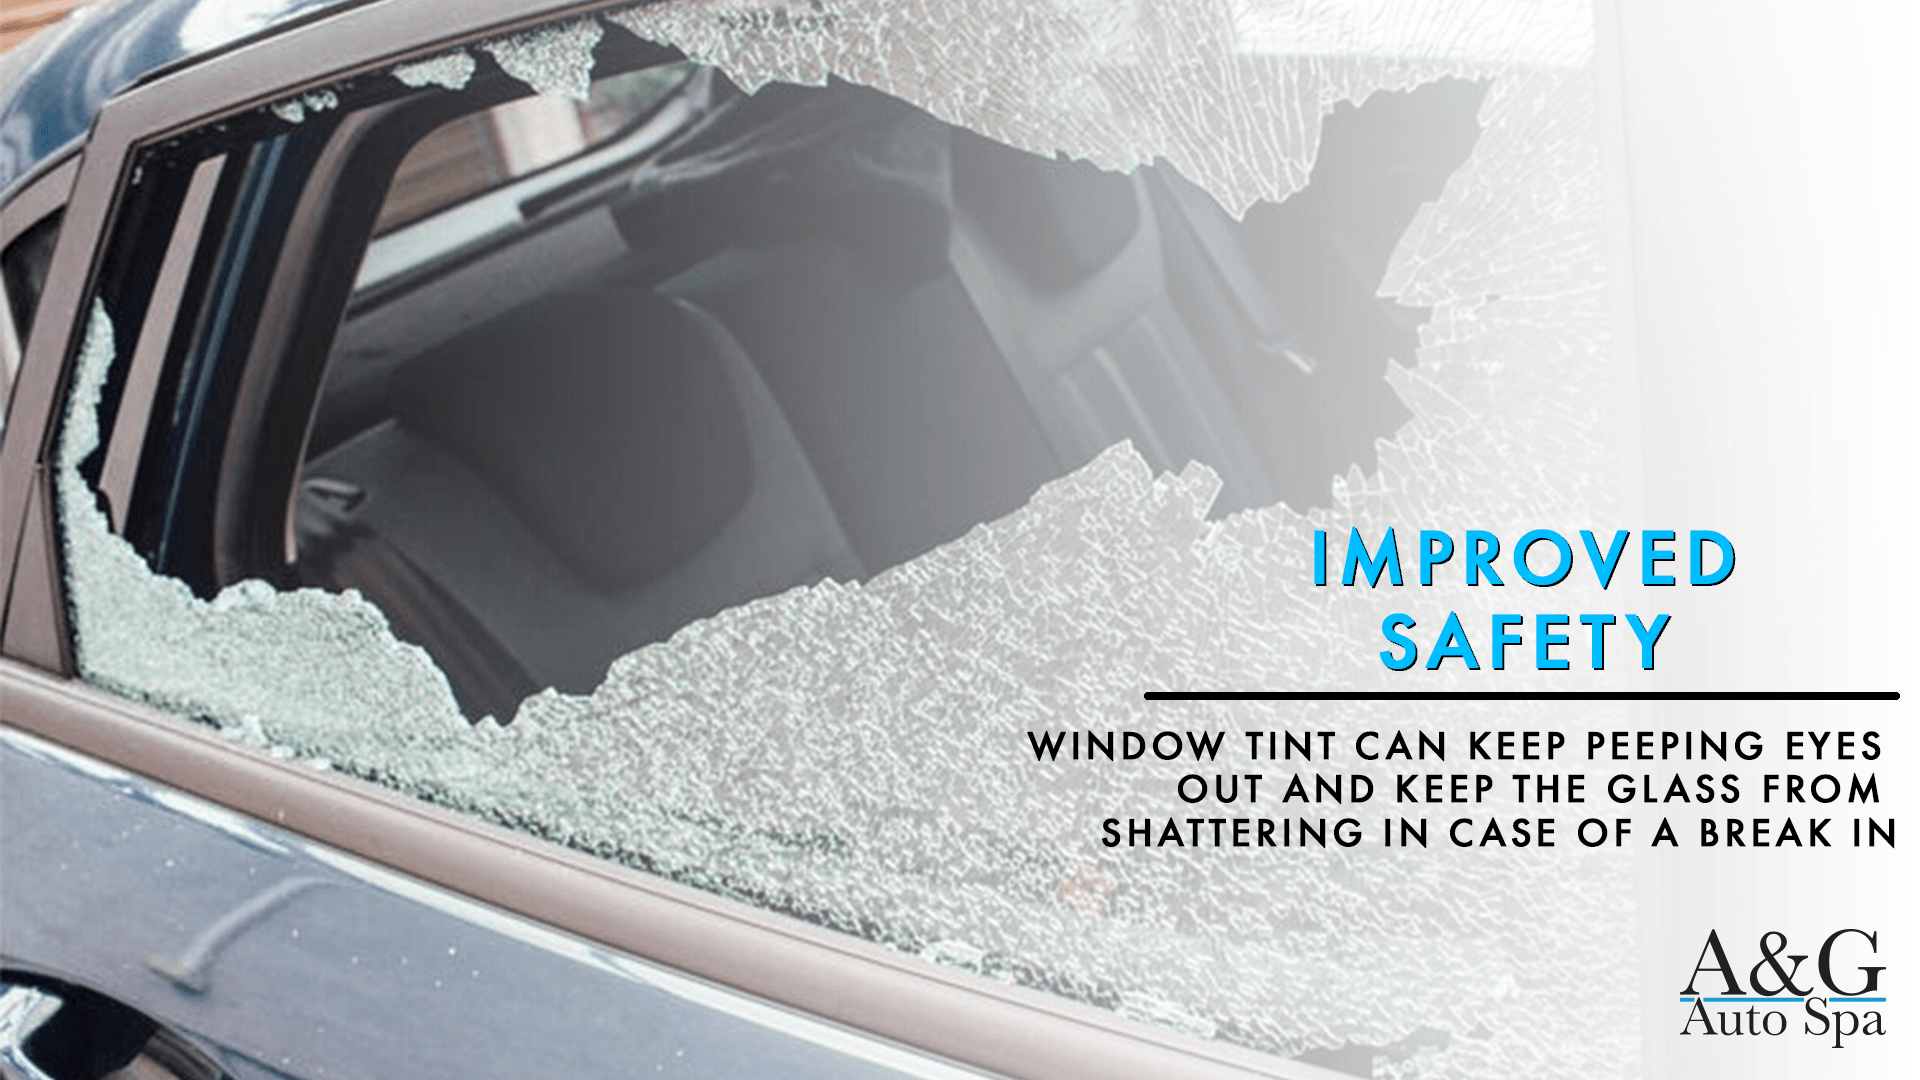 Window tint reduces break-ins